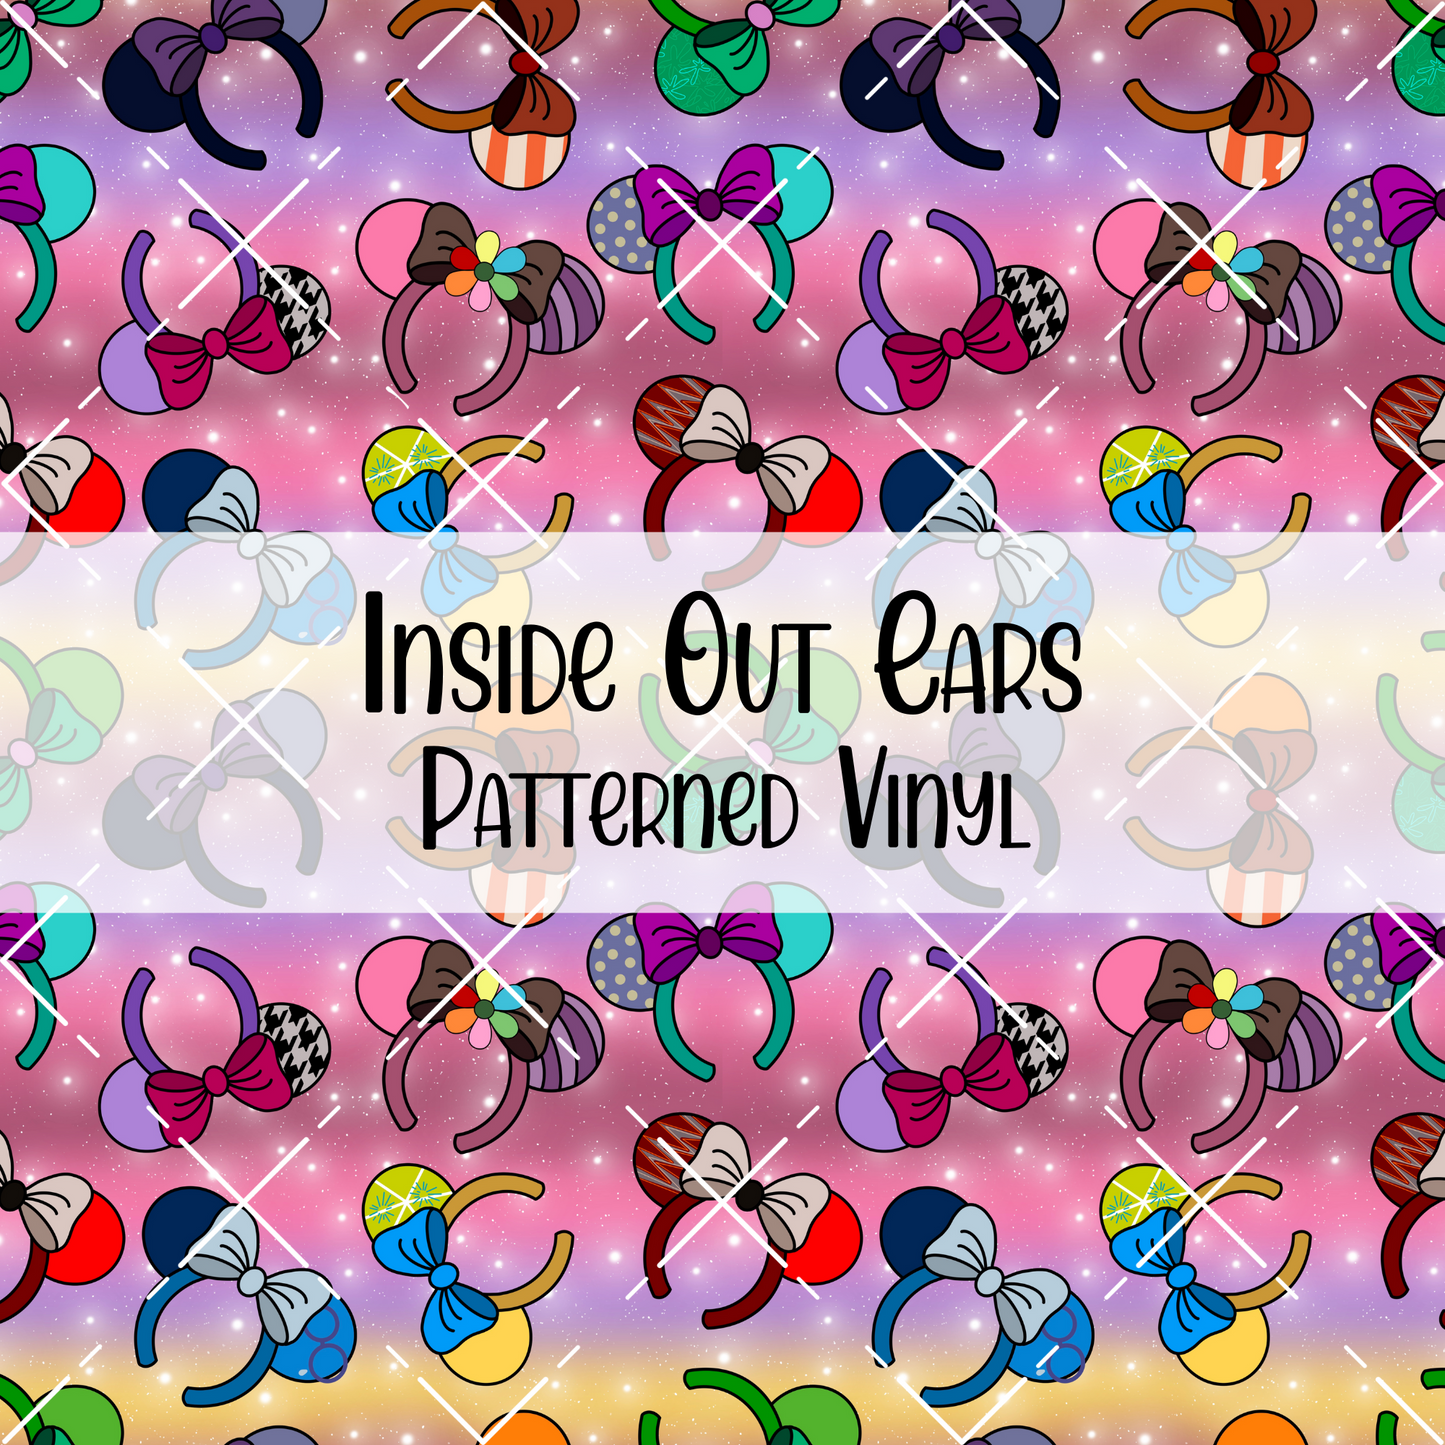 Inside Out Ears Patterned Vinyl